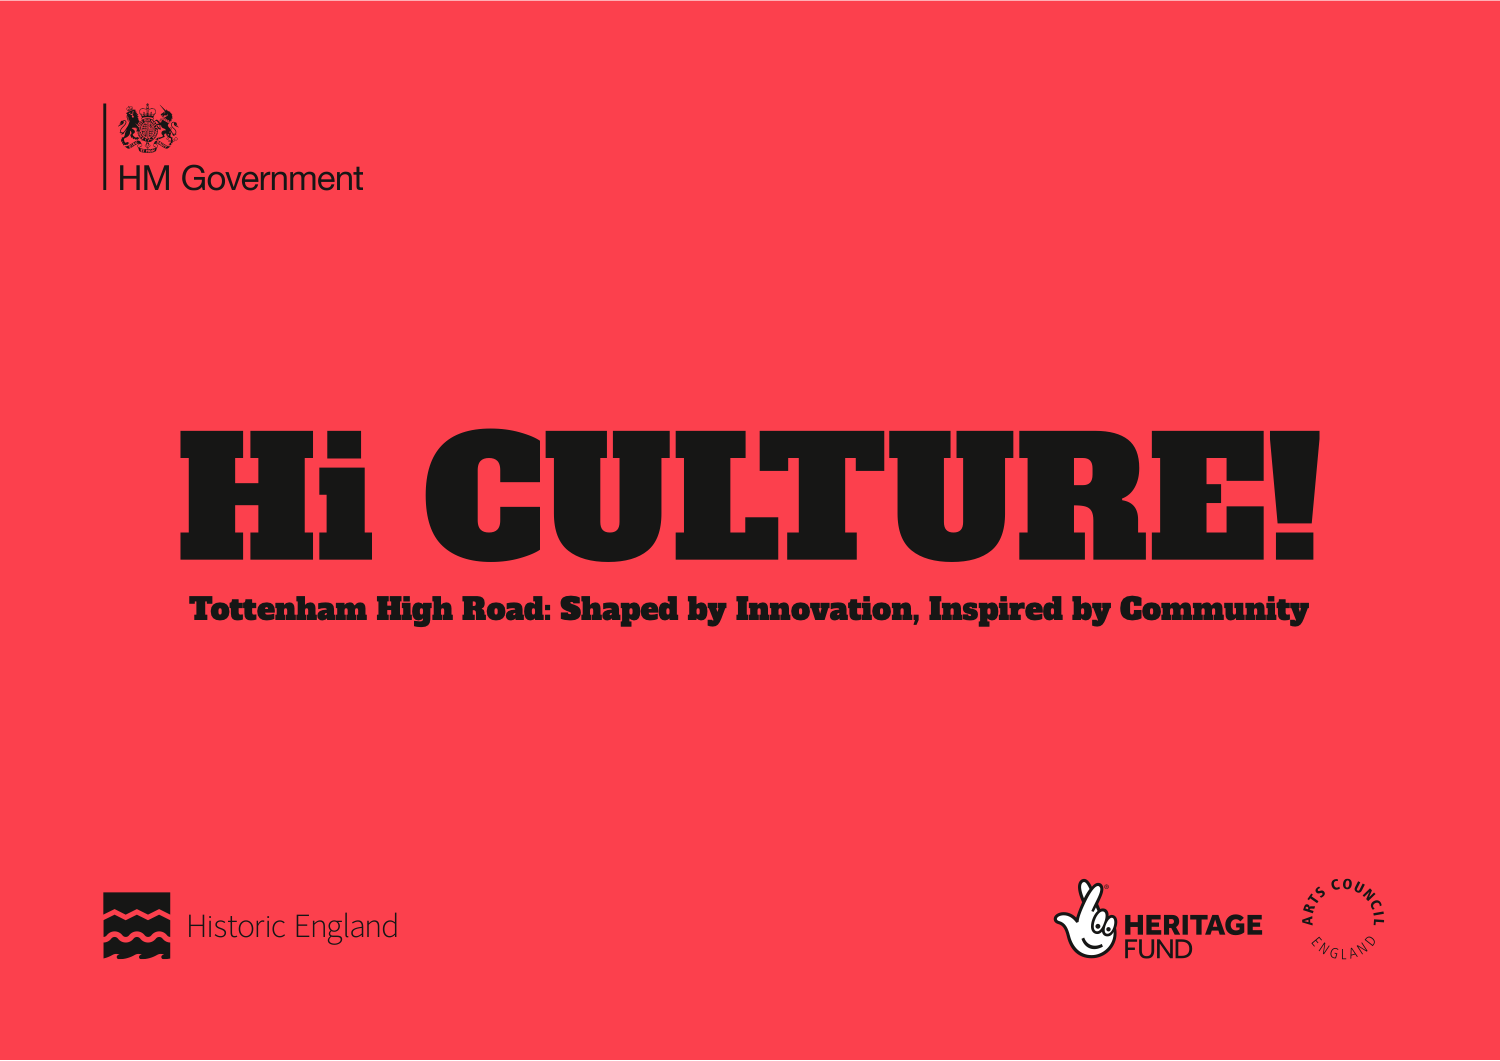 Hi Culture! High Street Heritage Action Zone in Bruce Grove, Tottenham High Road